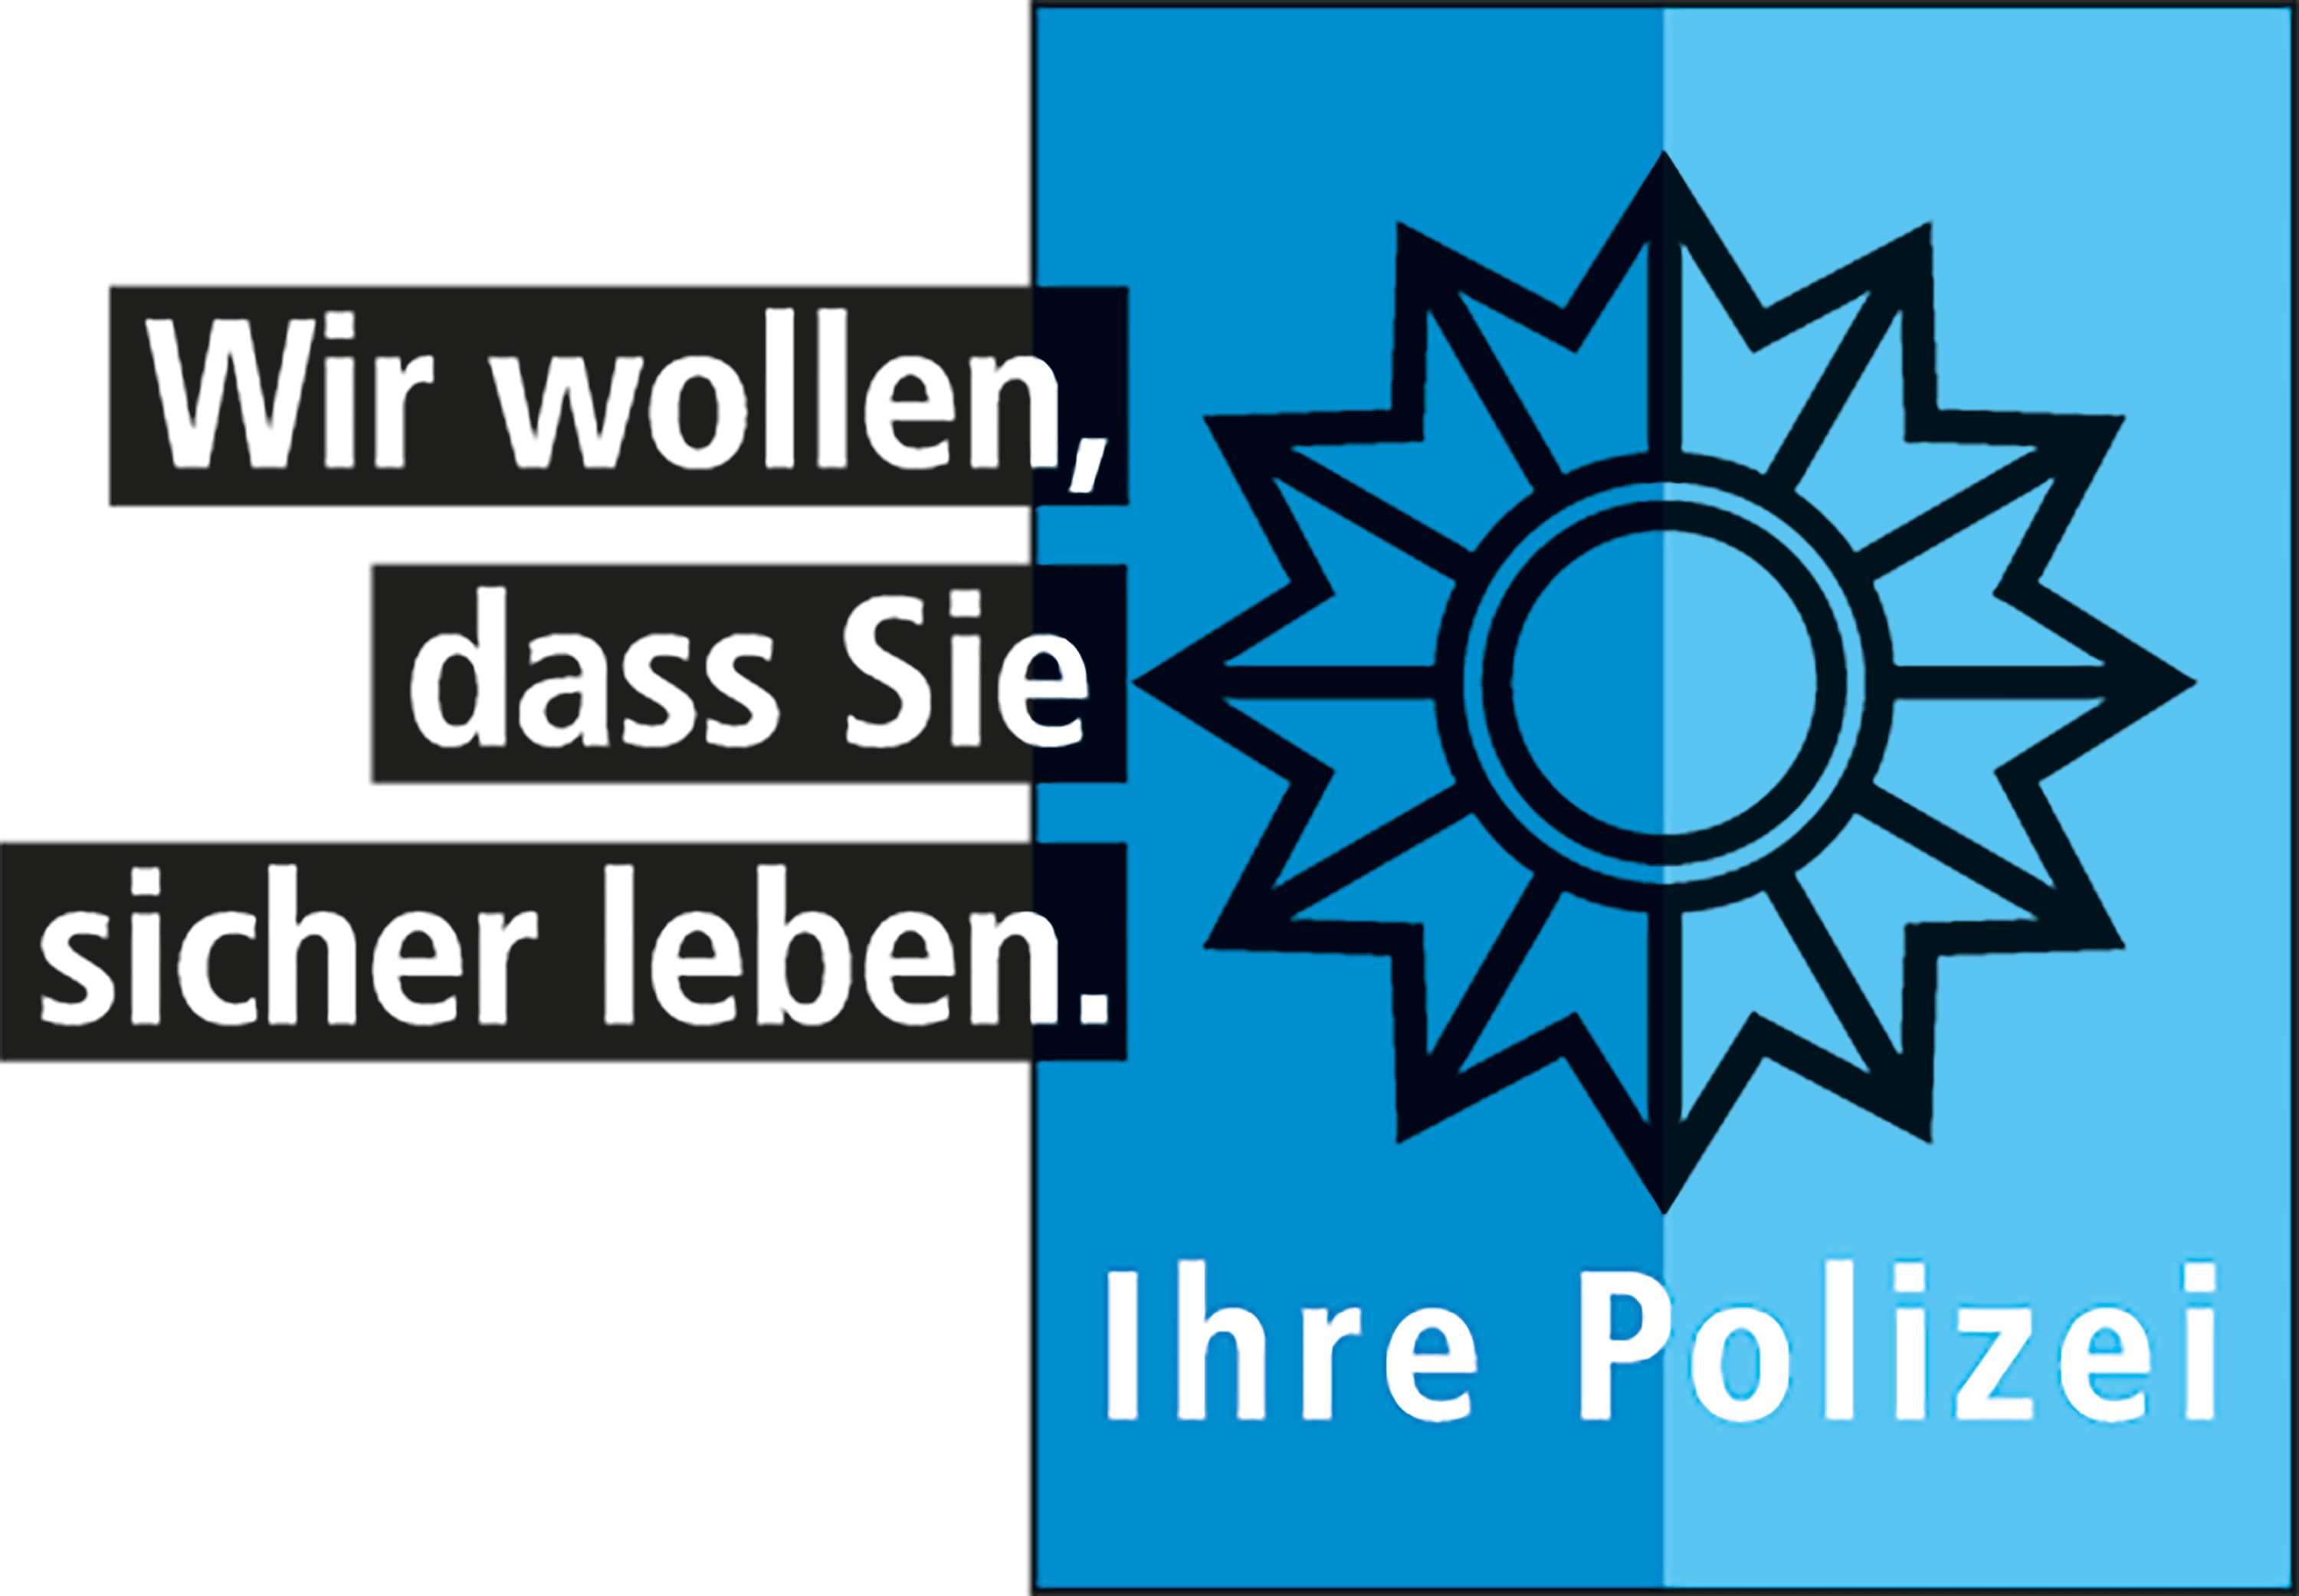 Polizei_Logo